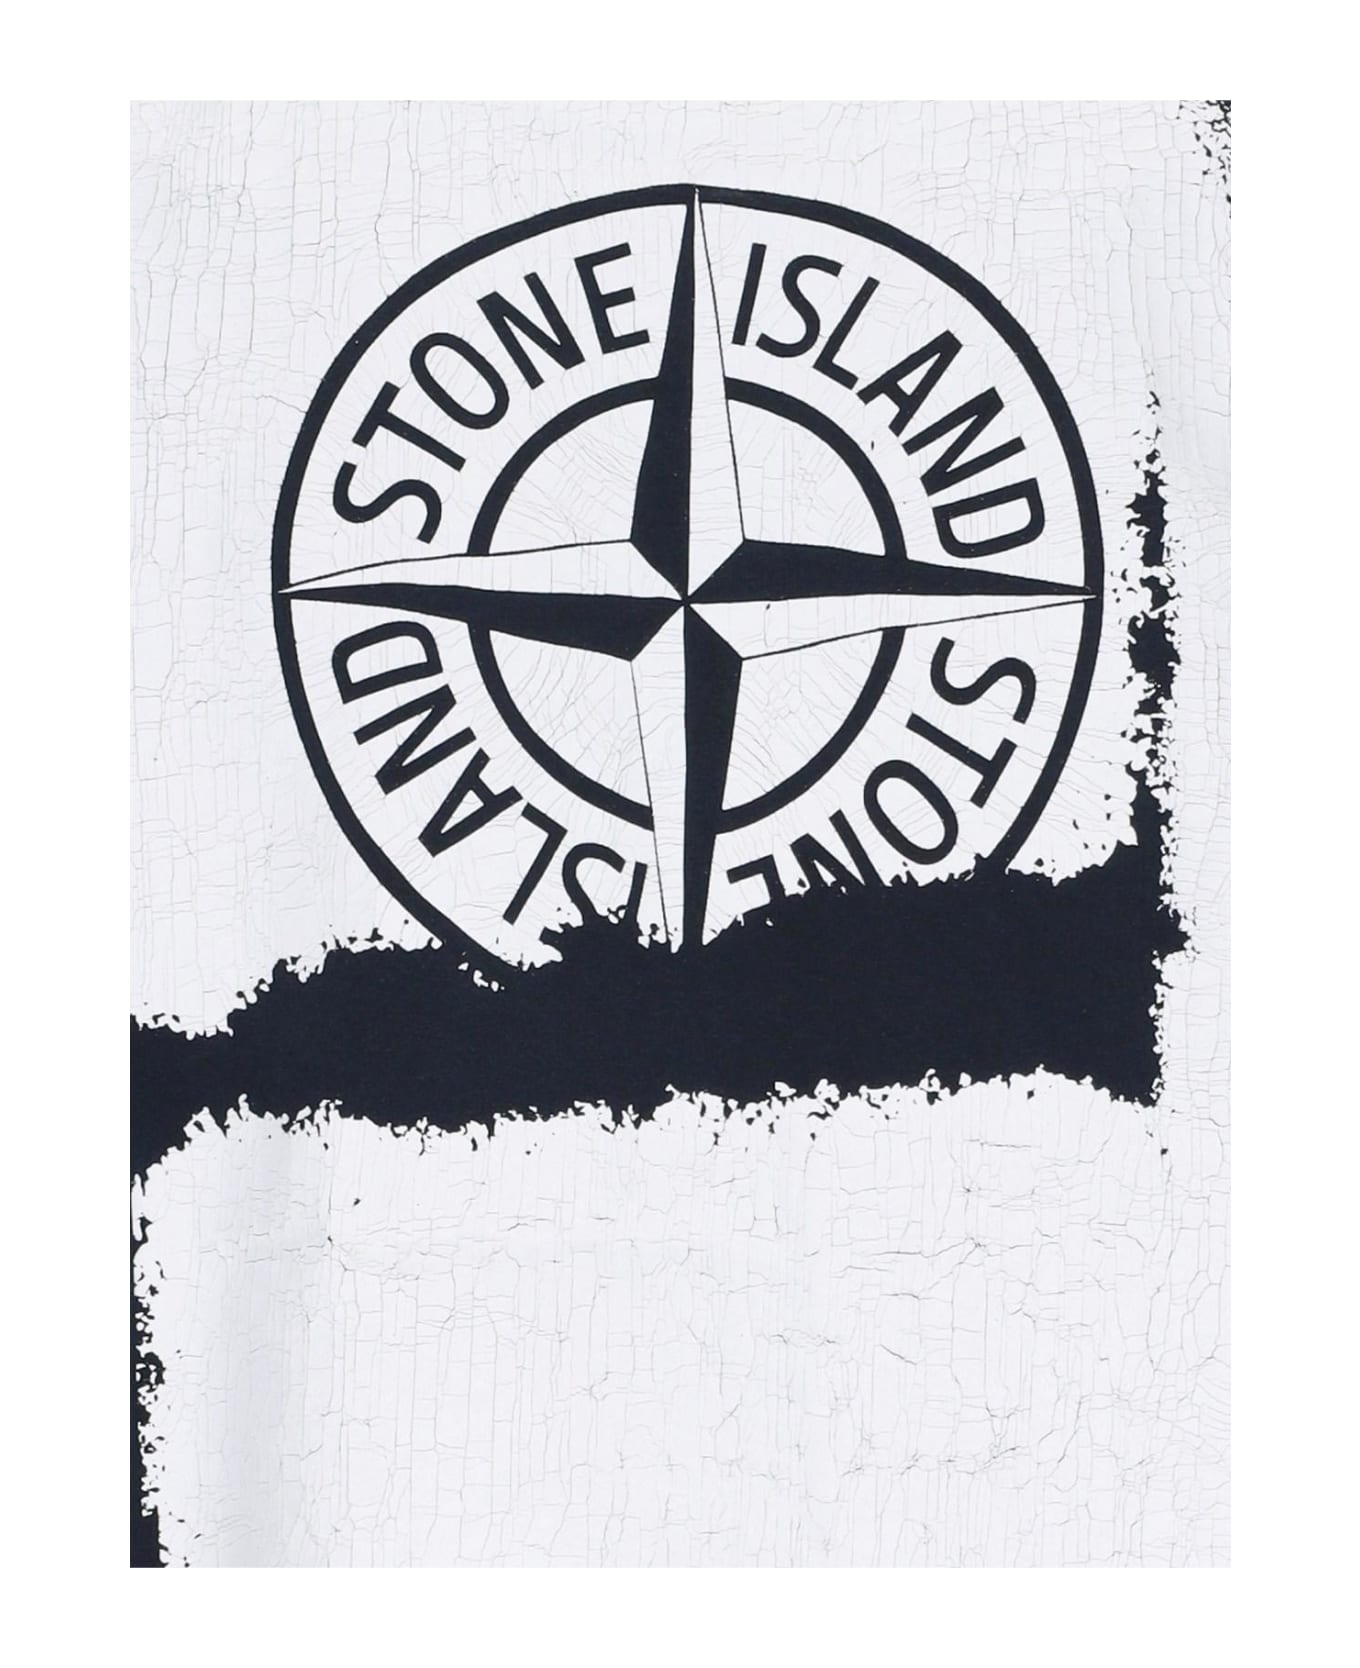 Stone Island Back Print T-shirt - Navy blue シャツ